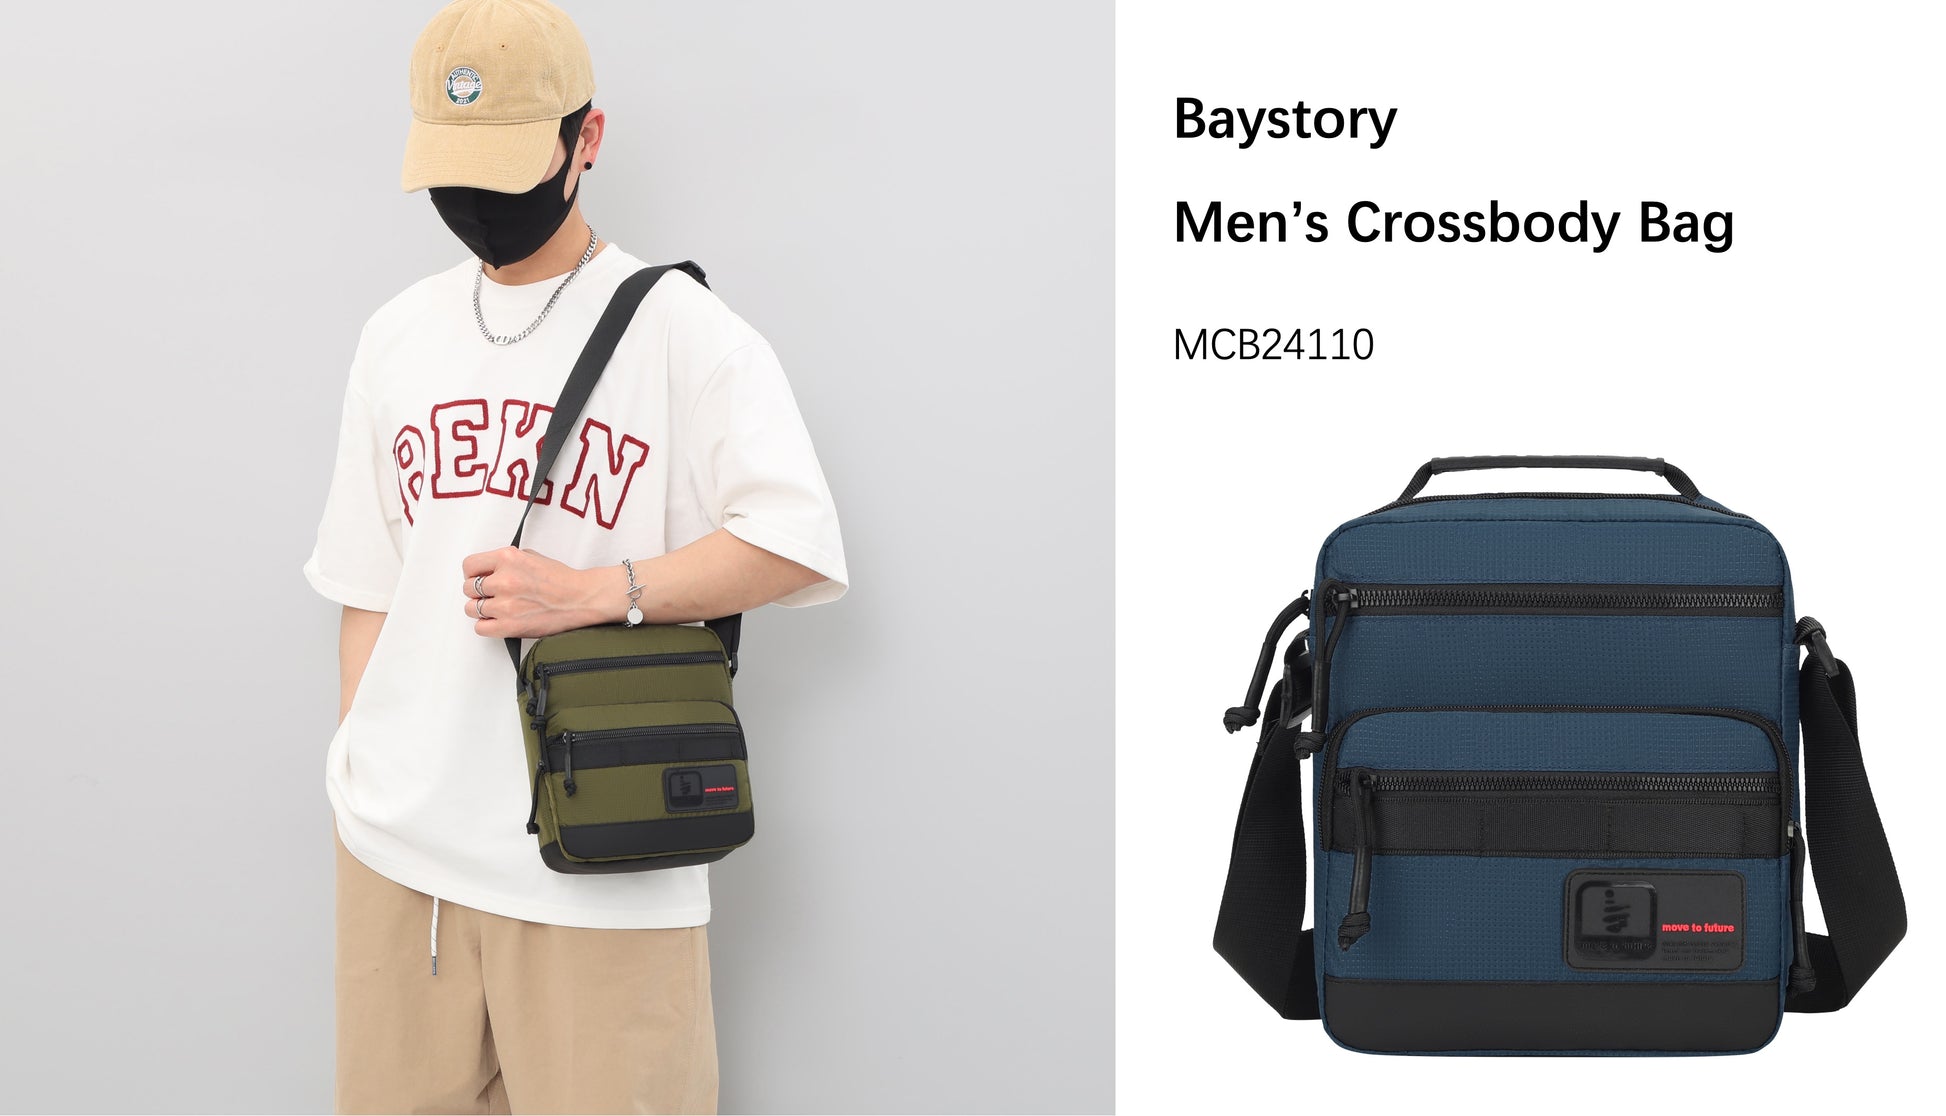 Baystory Men’s Crossbody Bag MCB24110 - Baystory